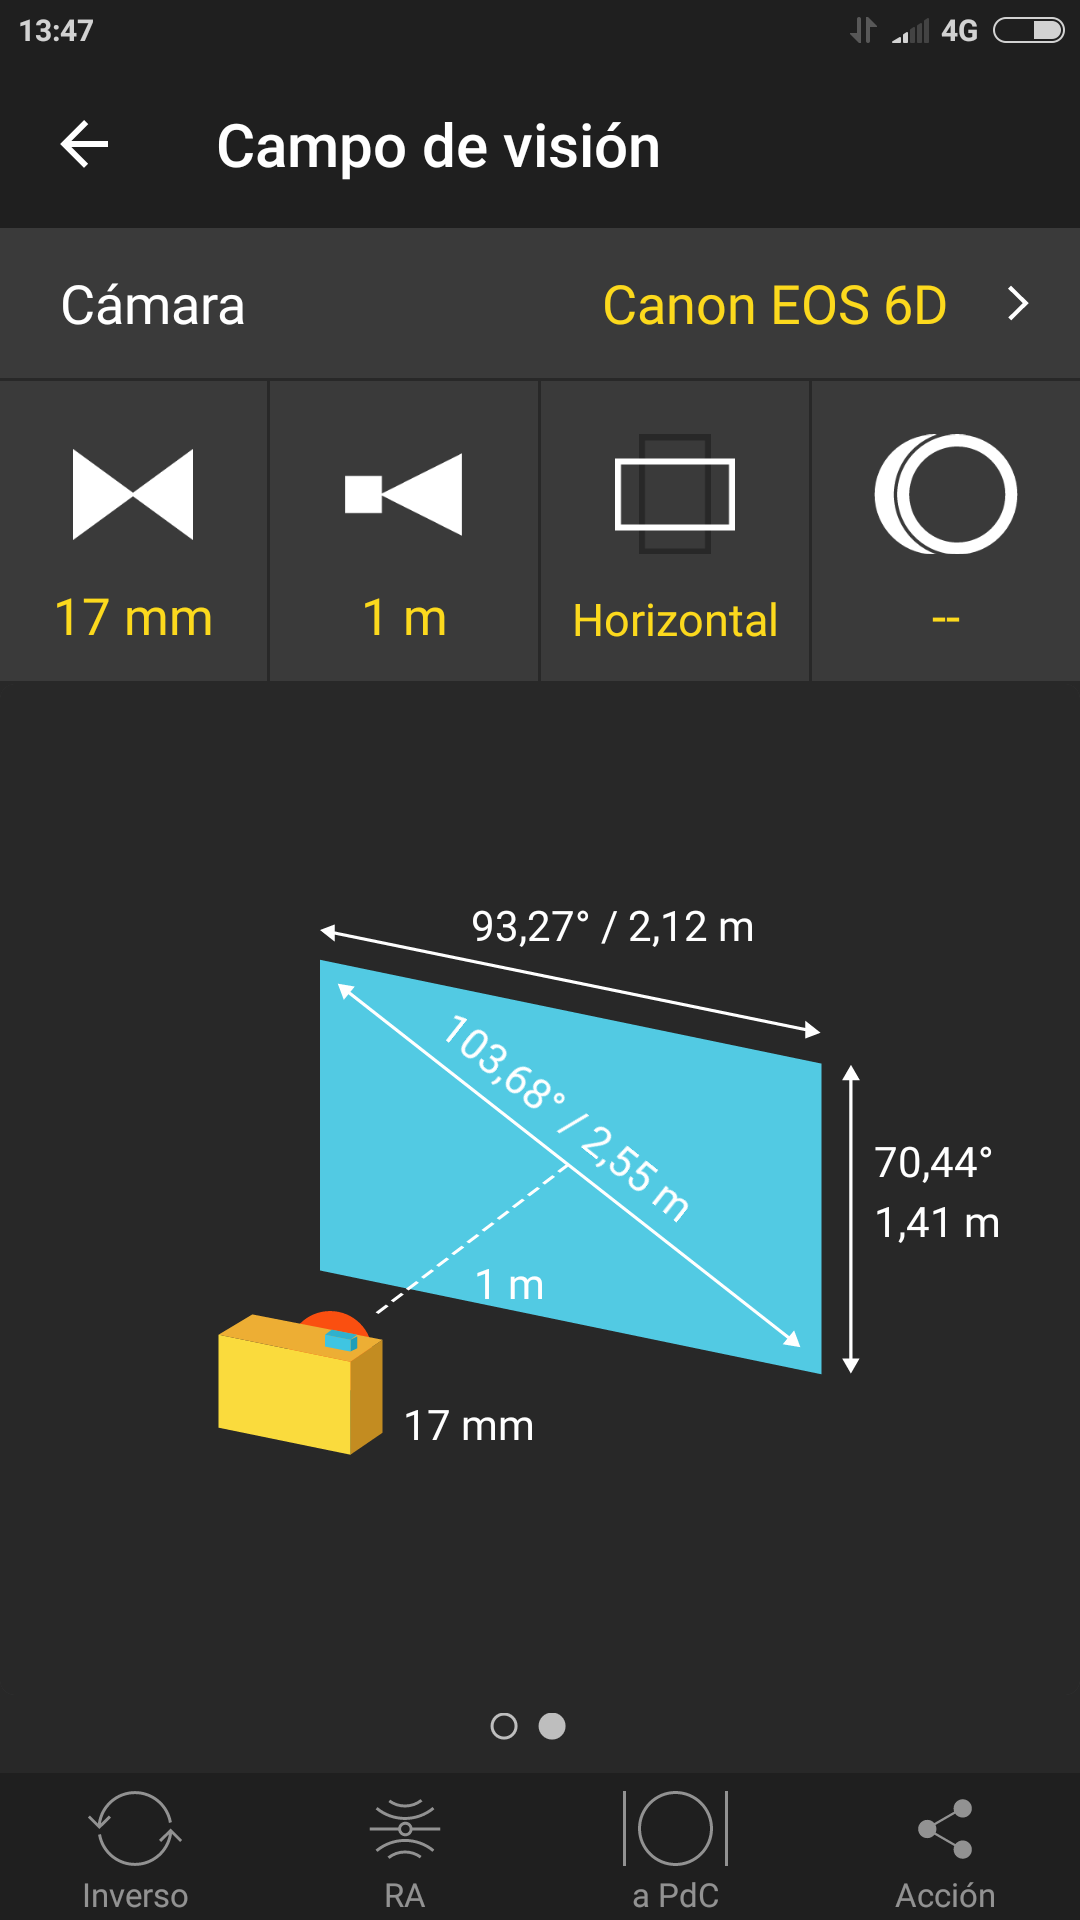 Angulo vision horizontal Fullframe y 17 mm - Grafico